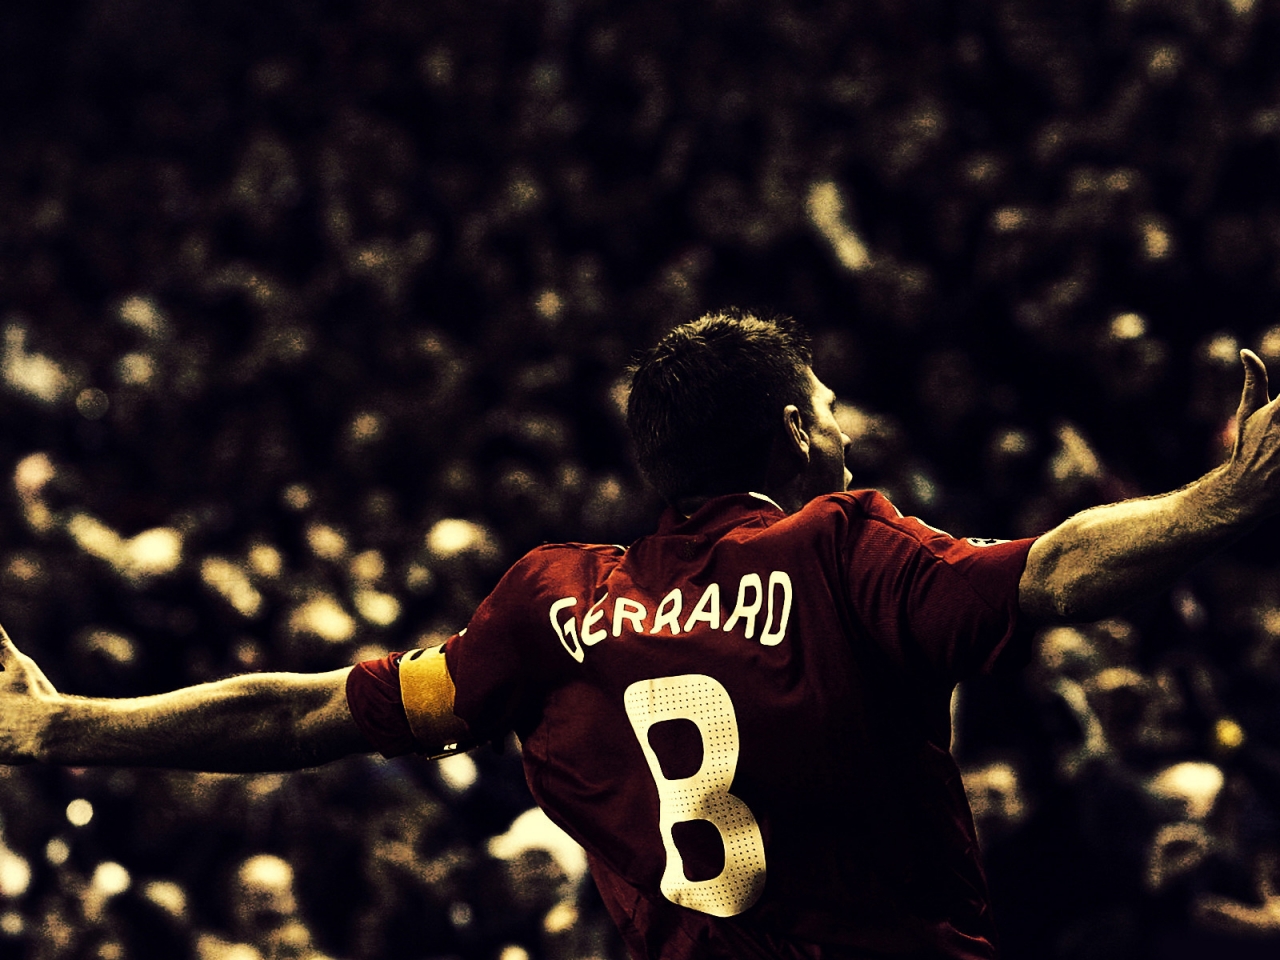 Gerrard Football Player for 1280 x 960 resolution